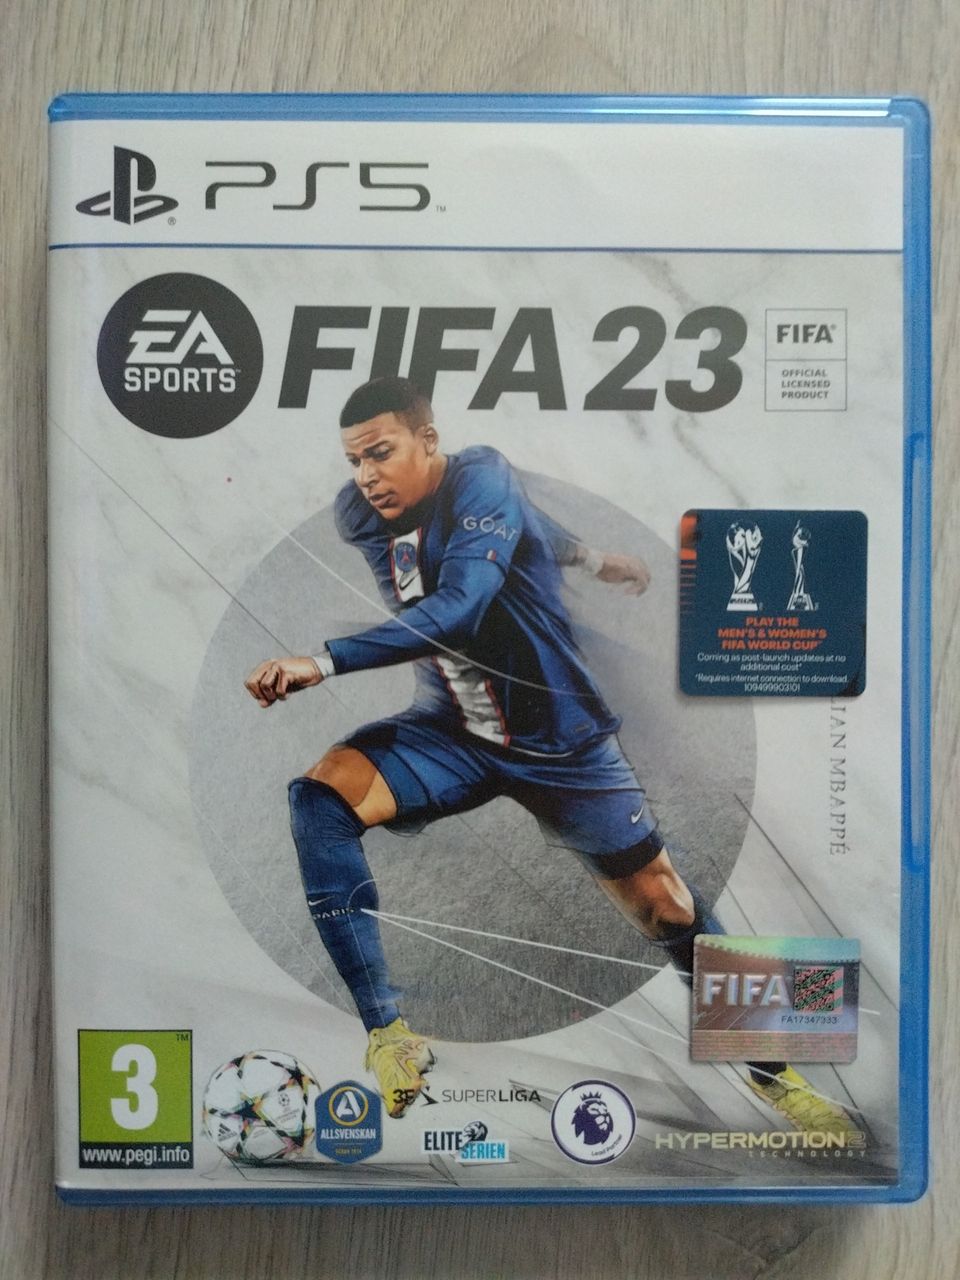 FIFA23 PS5